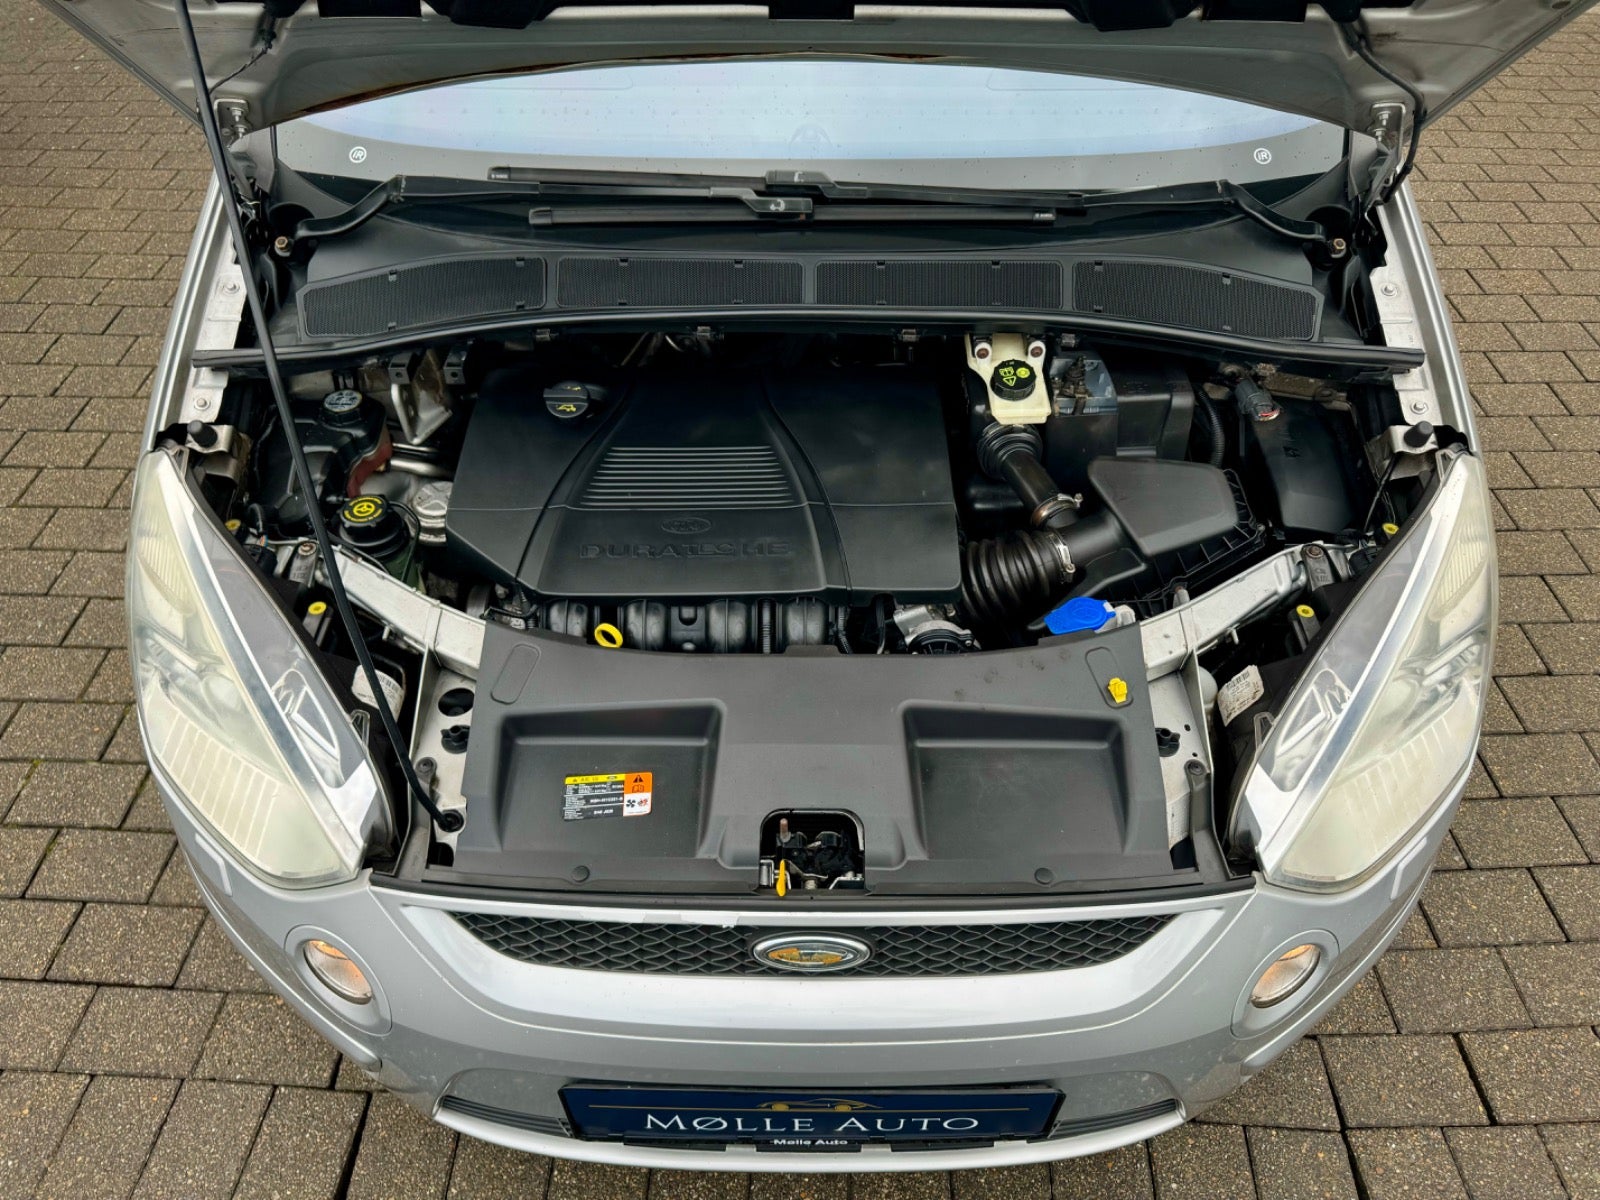 Ford S-MAX 2,0 Titanium Benzin modelår 2007 km 311000 træk